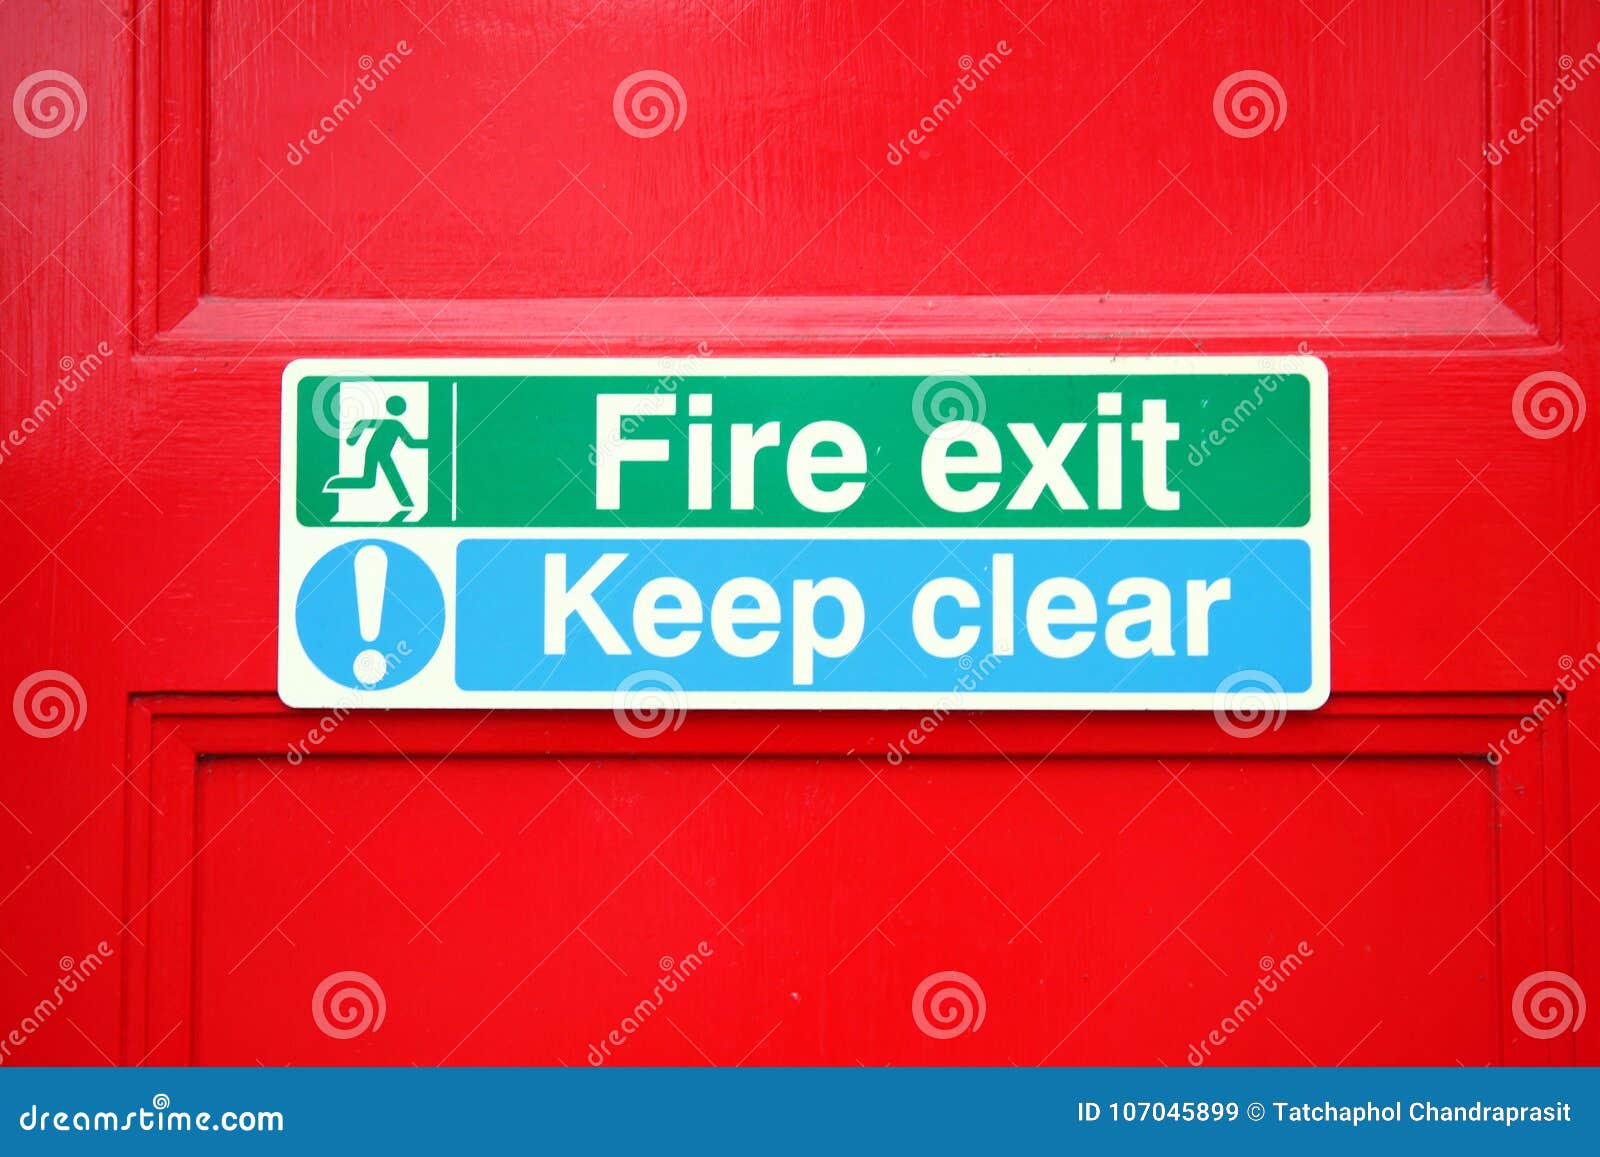 fire exit scene.